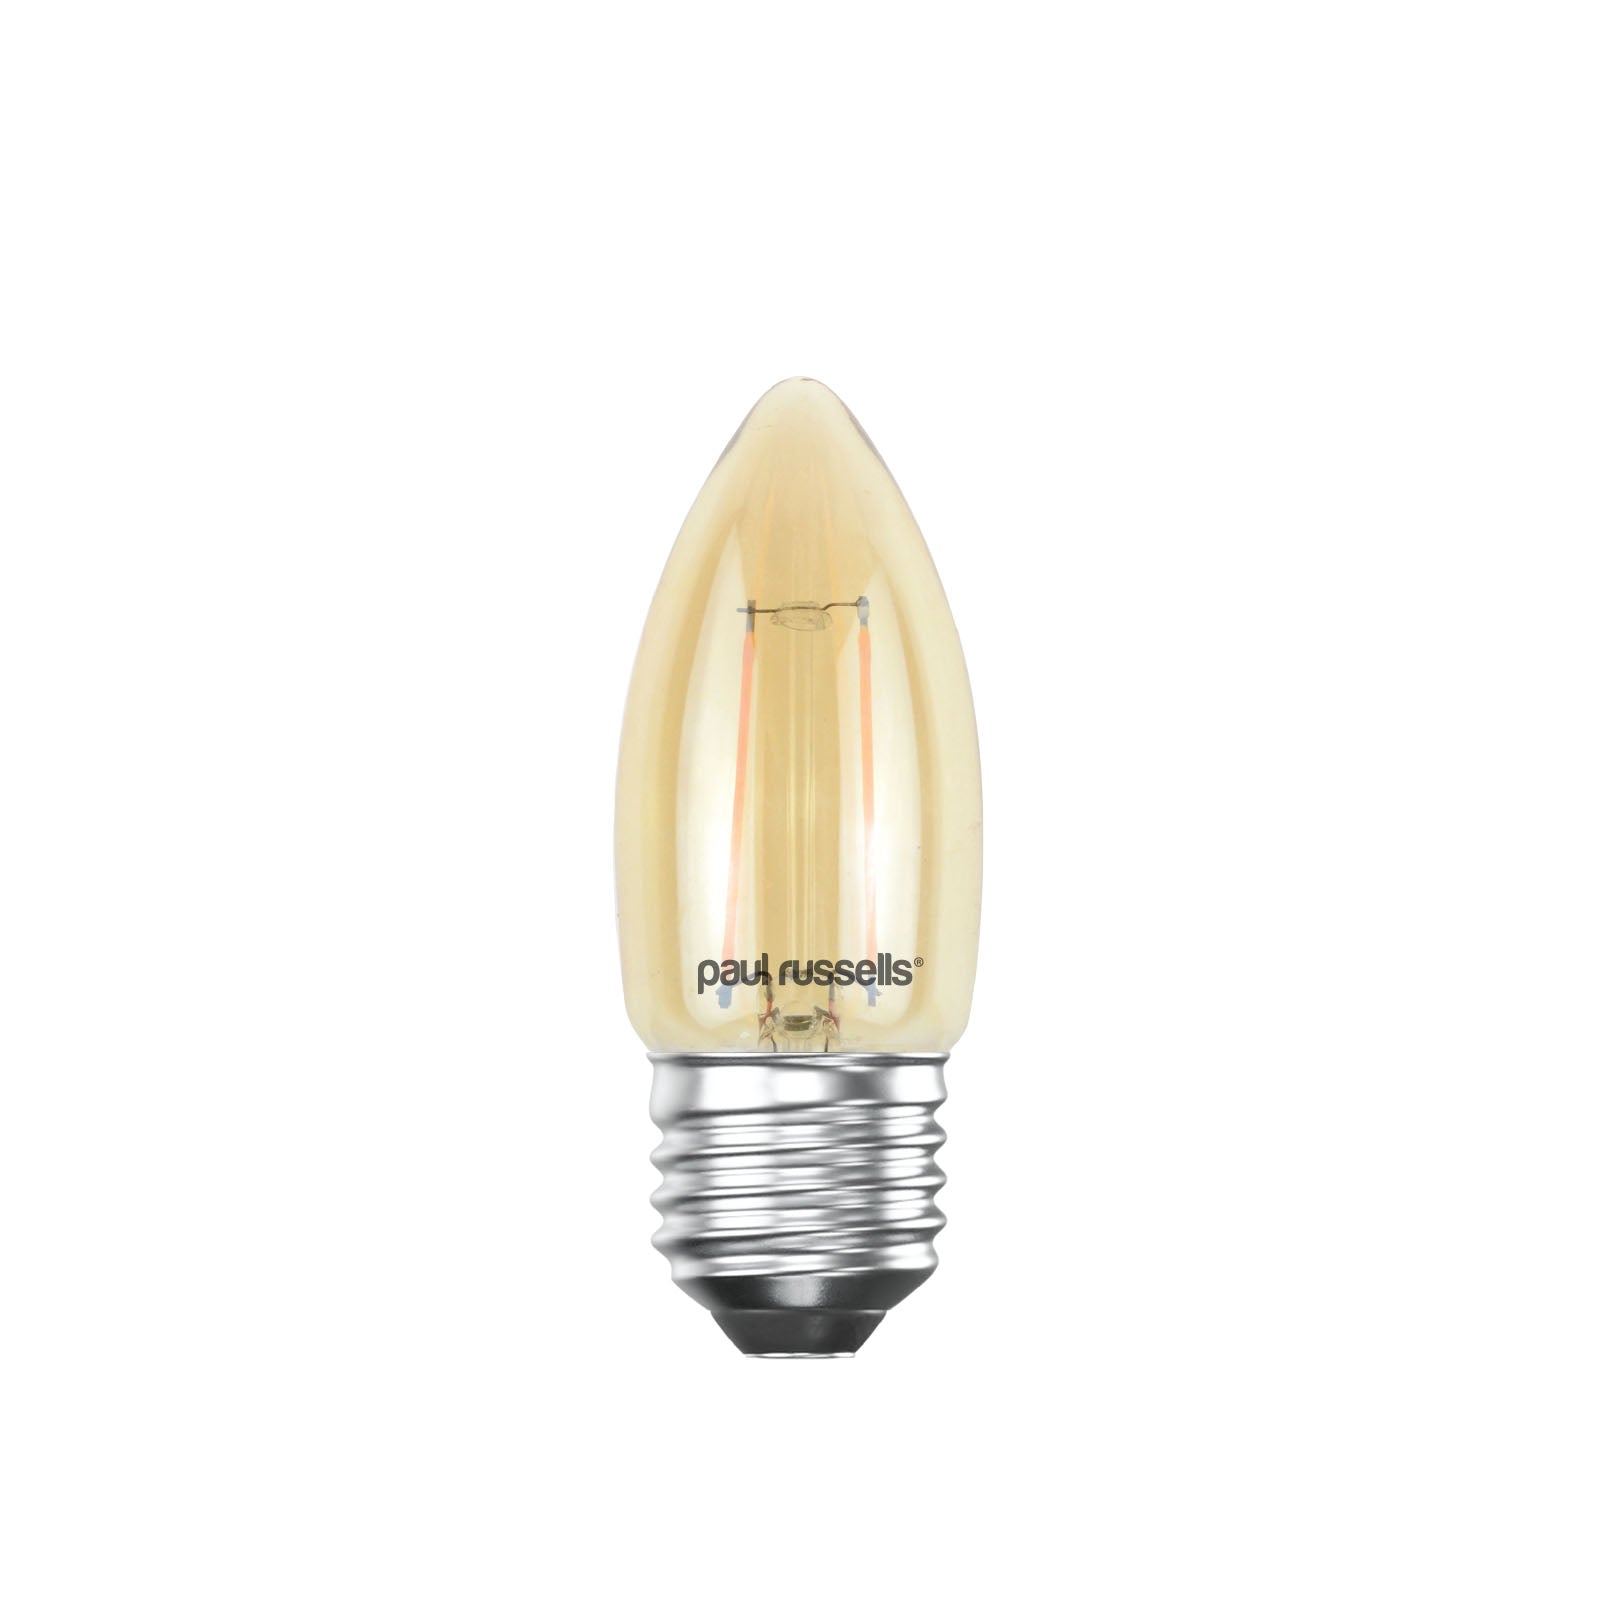 LED Filament Candle 2.5W=25W Extra Warm White Amber 2200K ES E27 Edison Screw Bulbs